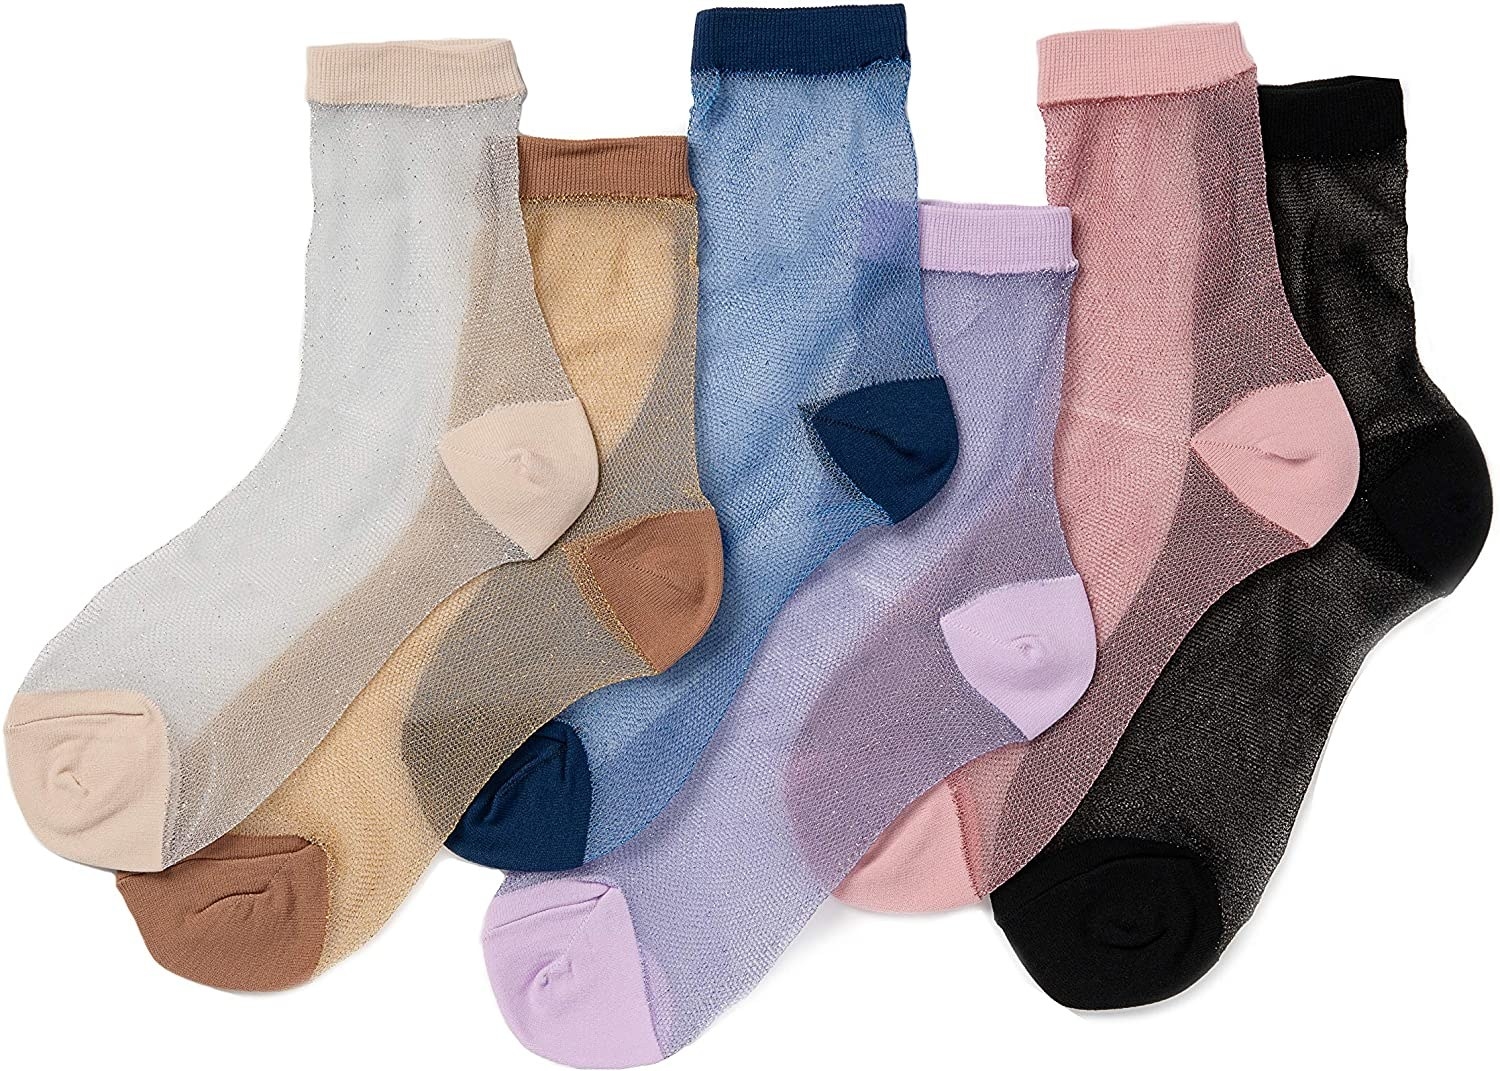 The socks in beige, brown, lavender, pink, and black